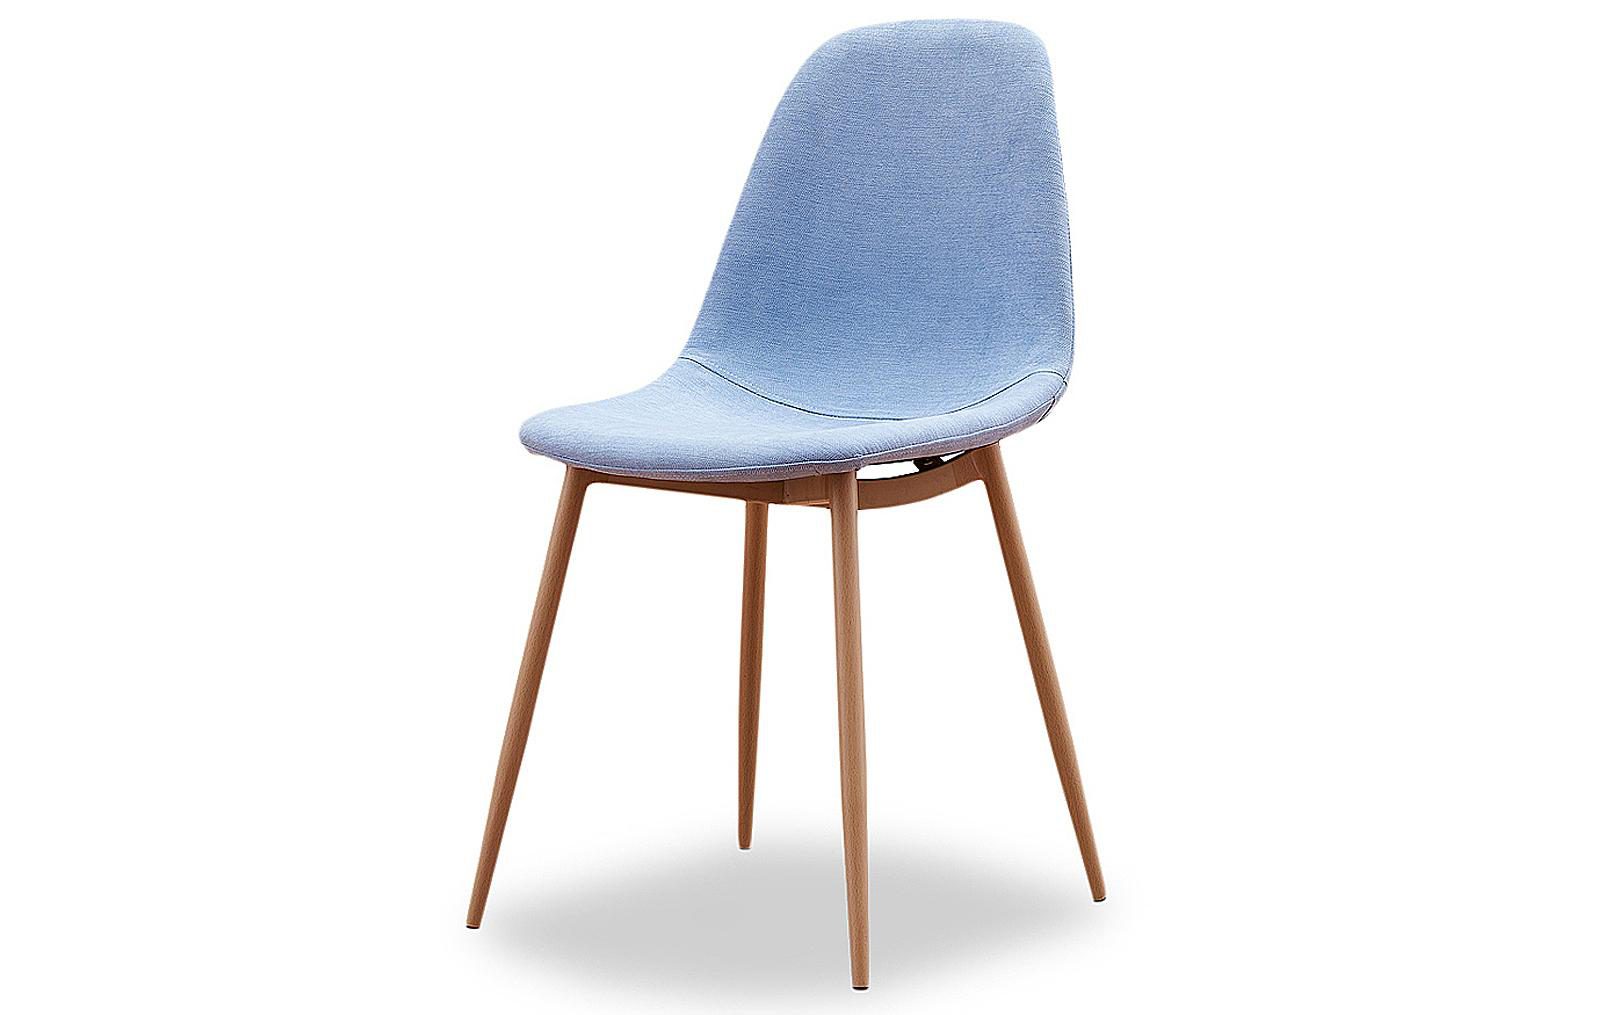 Обеденные стулья  The Furnish Стул (europe style) голубой 44.0x84.0x38.0 см.